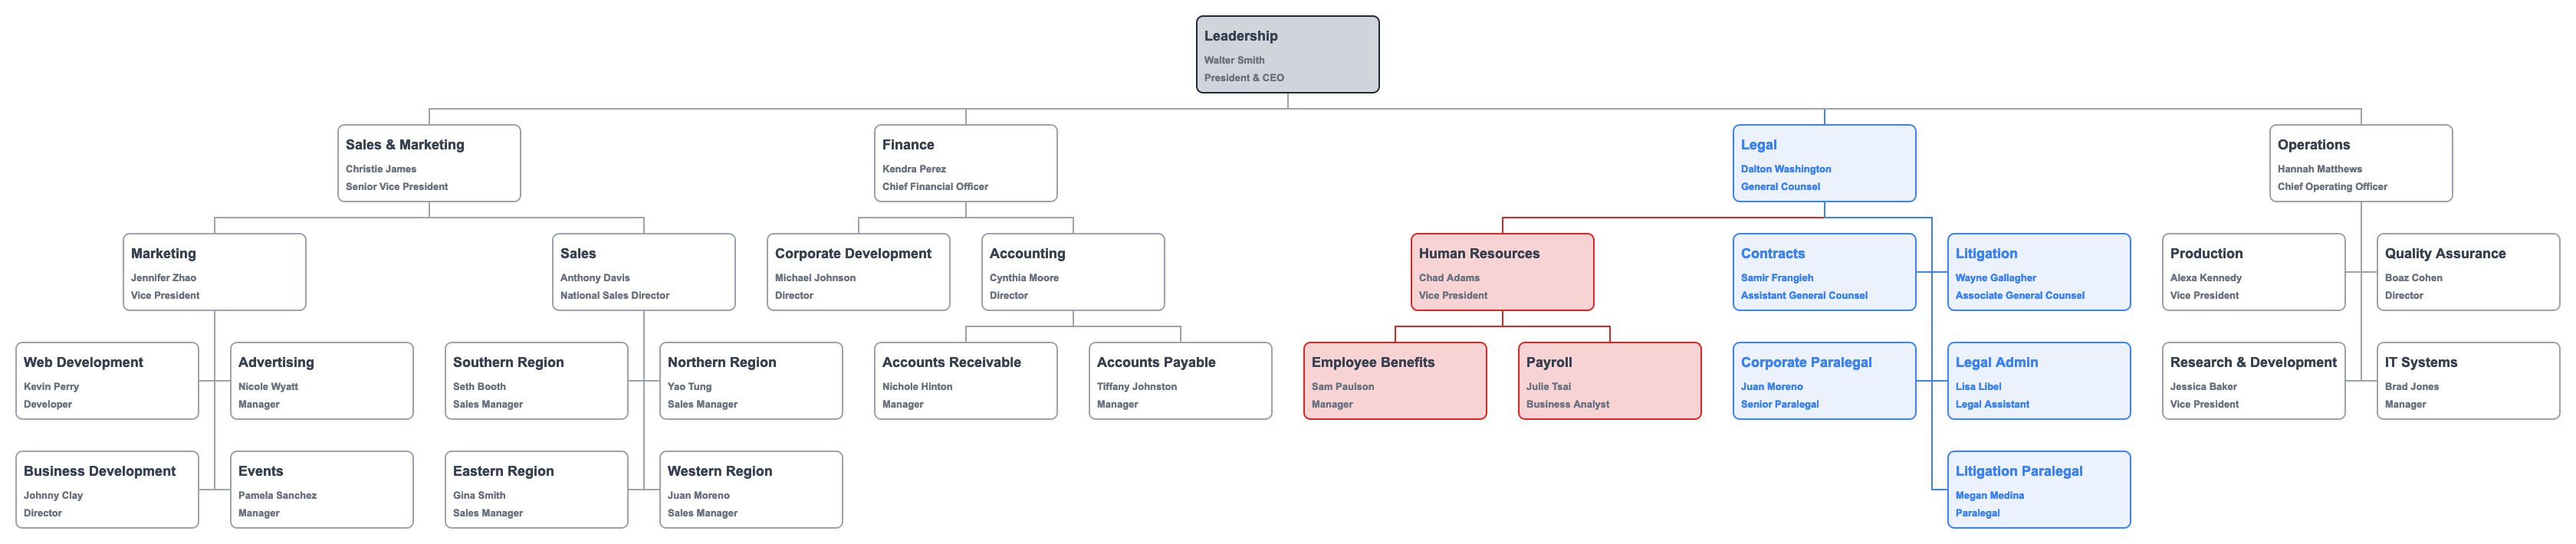 Organization chart showing department reorganization